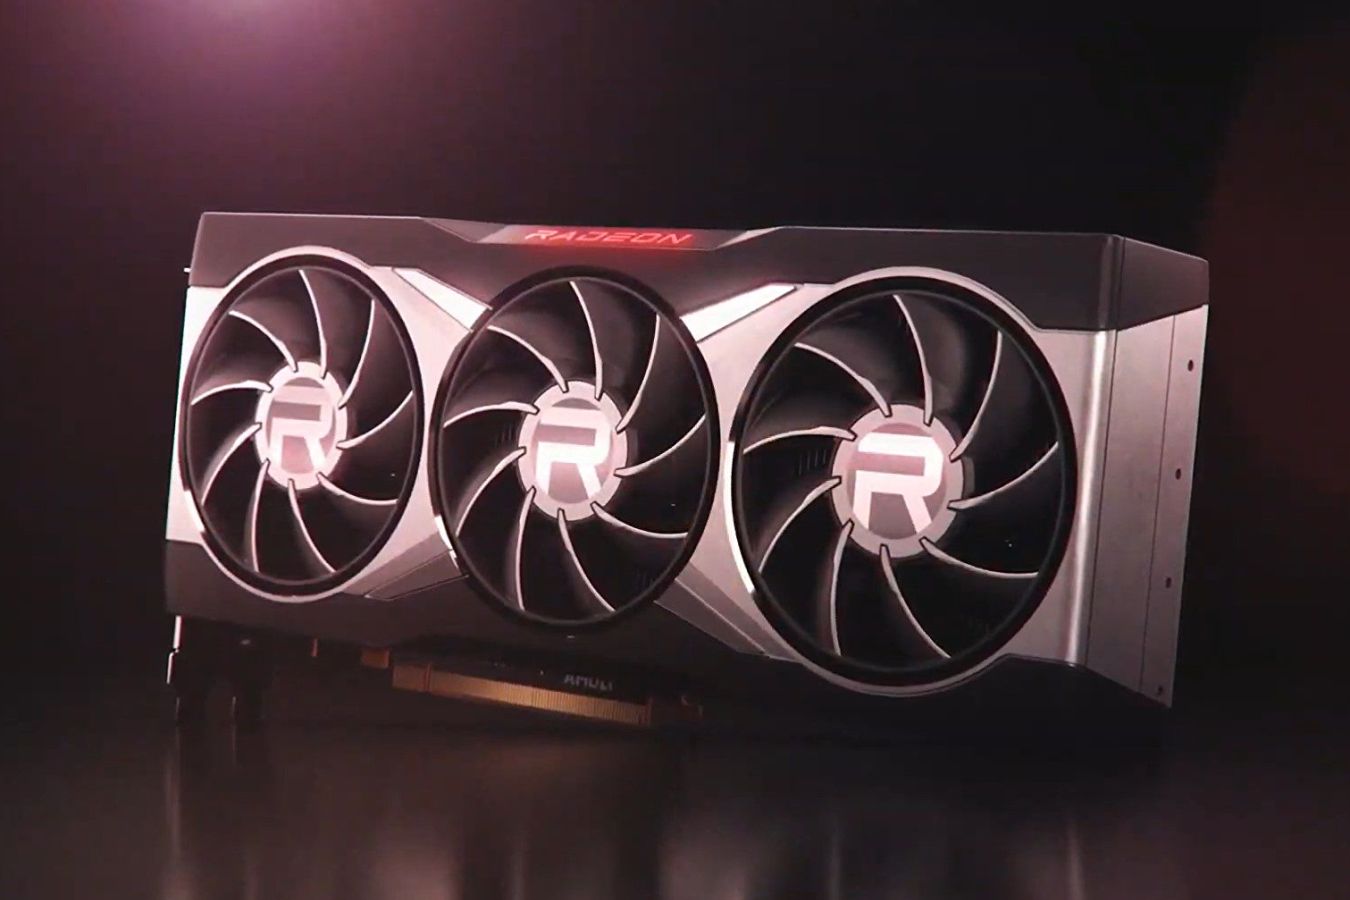 AMD снизила цены на видеокарты серии Radeon RX 6000